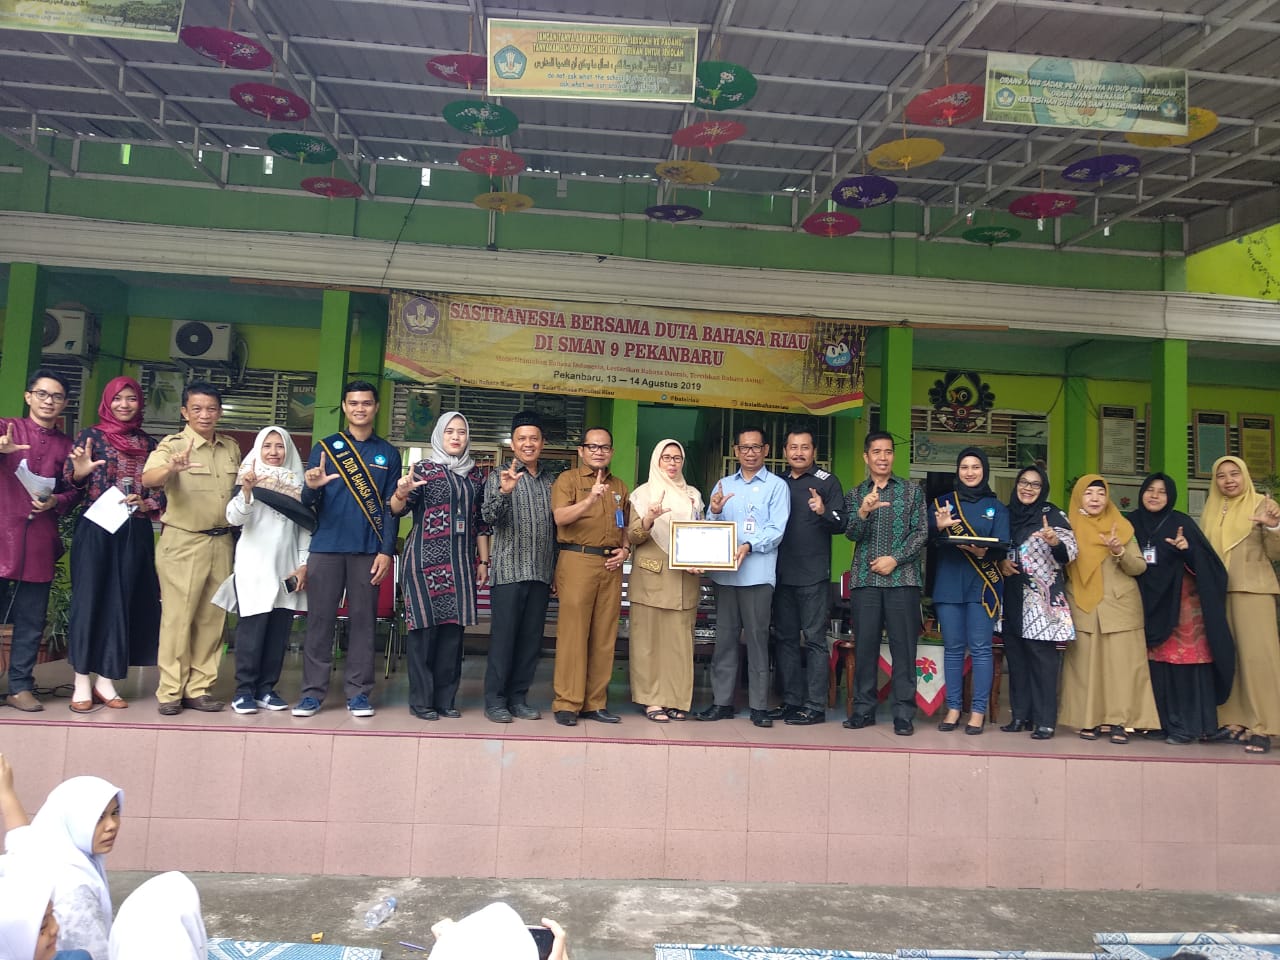 Balai Bahasa Riau dan Duta Bahasa Taja Sastranesia di SMAN 9 Pekanbaru